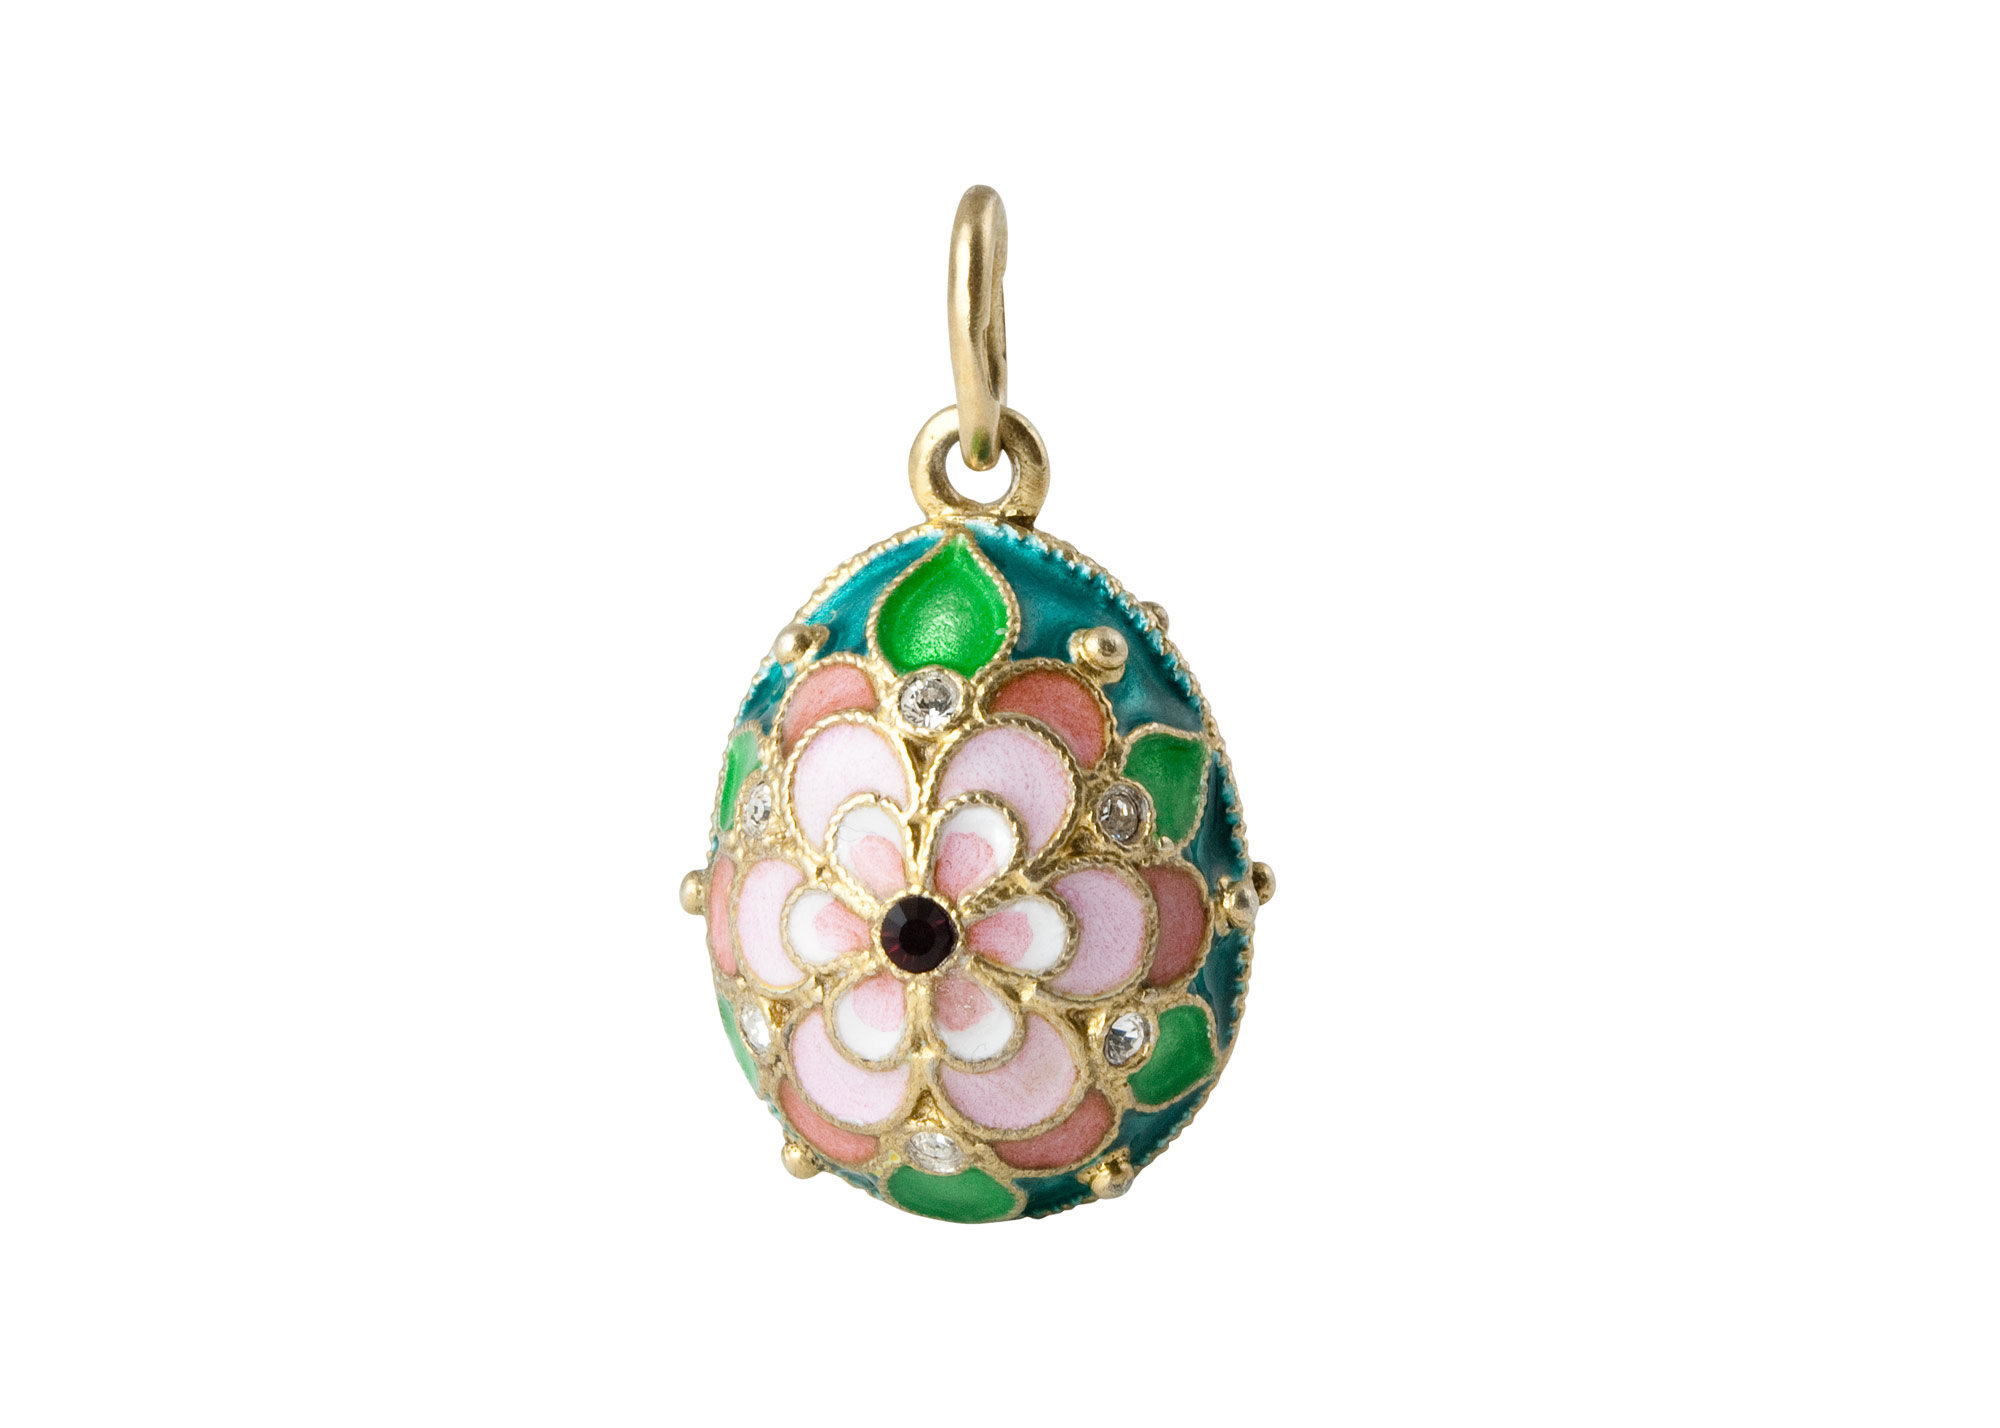 Buy Faberge Pendant Pink Flower on Green Field .75" at GoldenCockerel.com